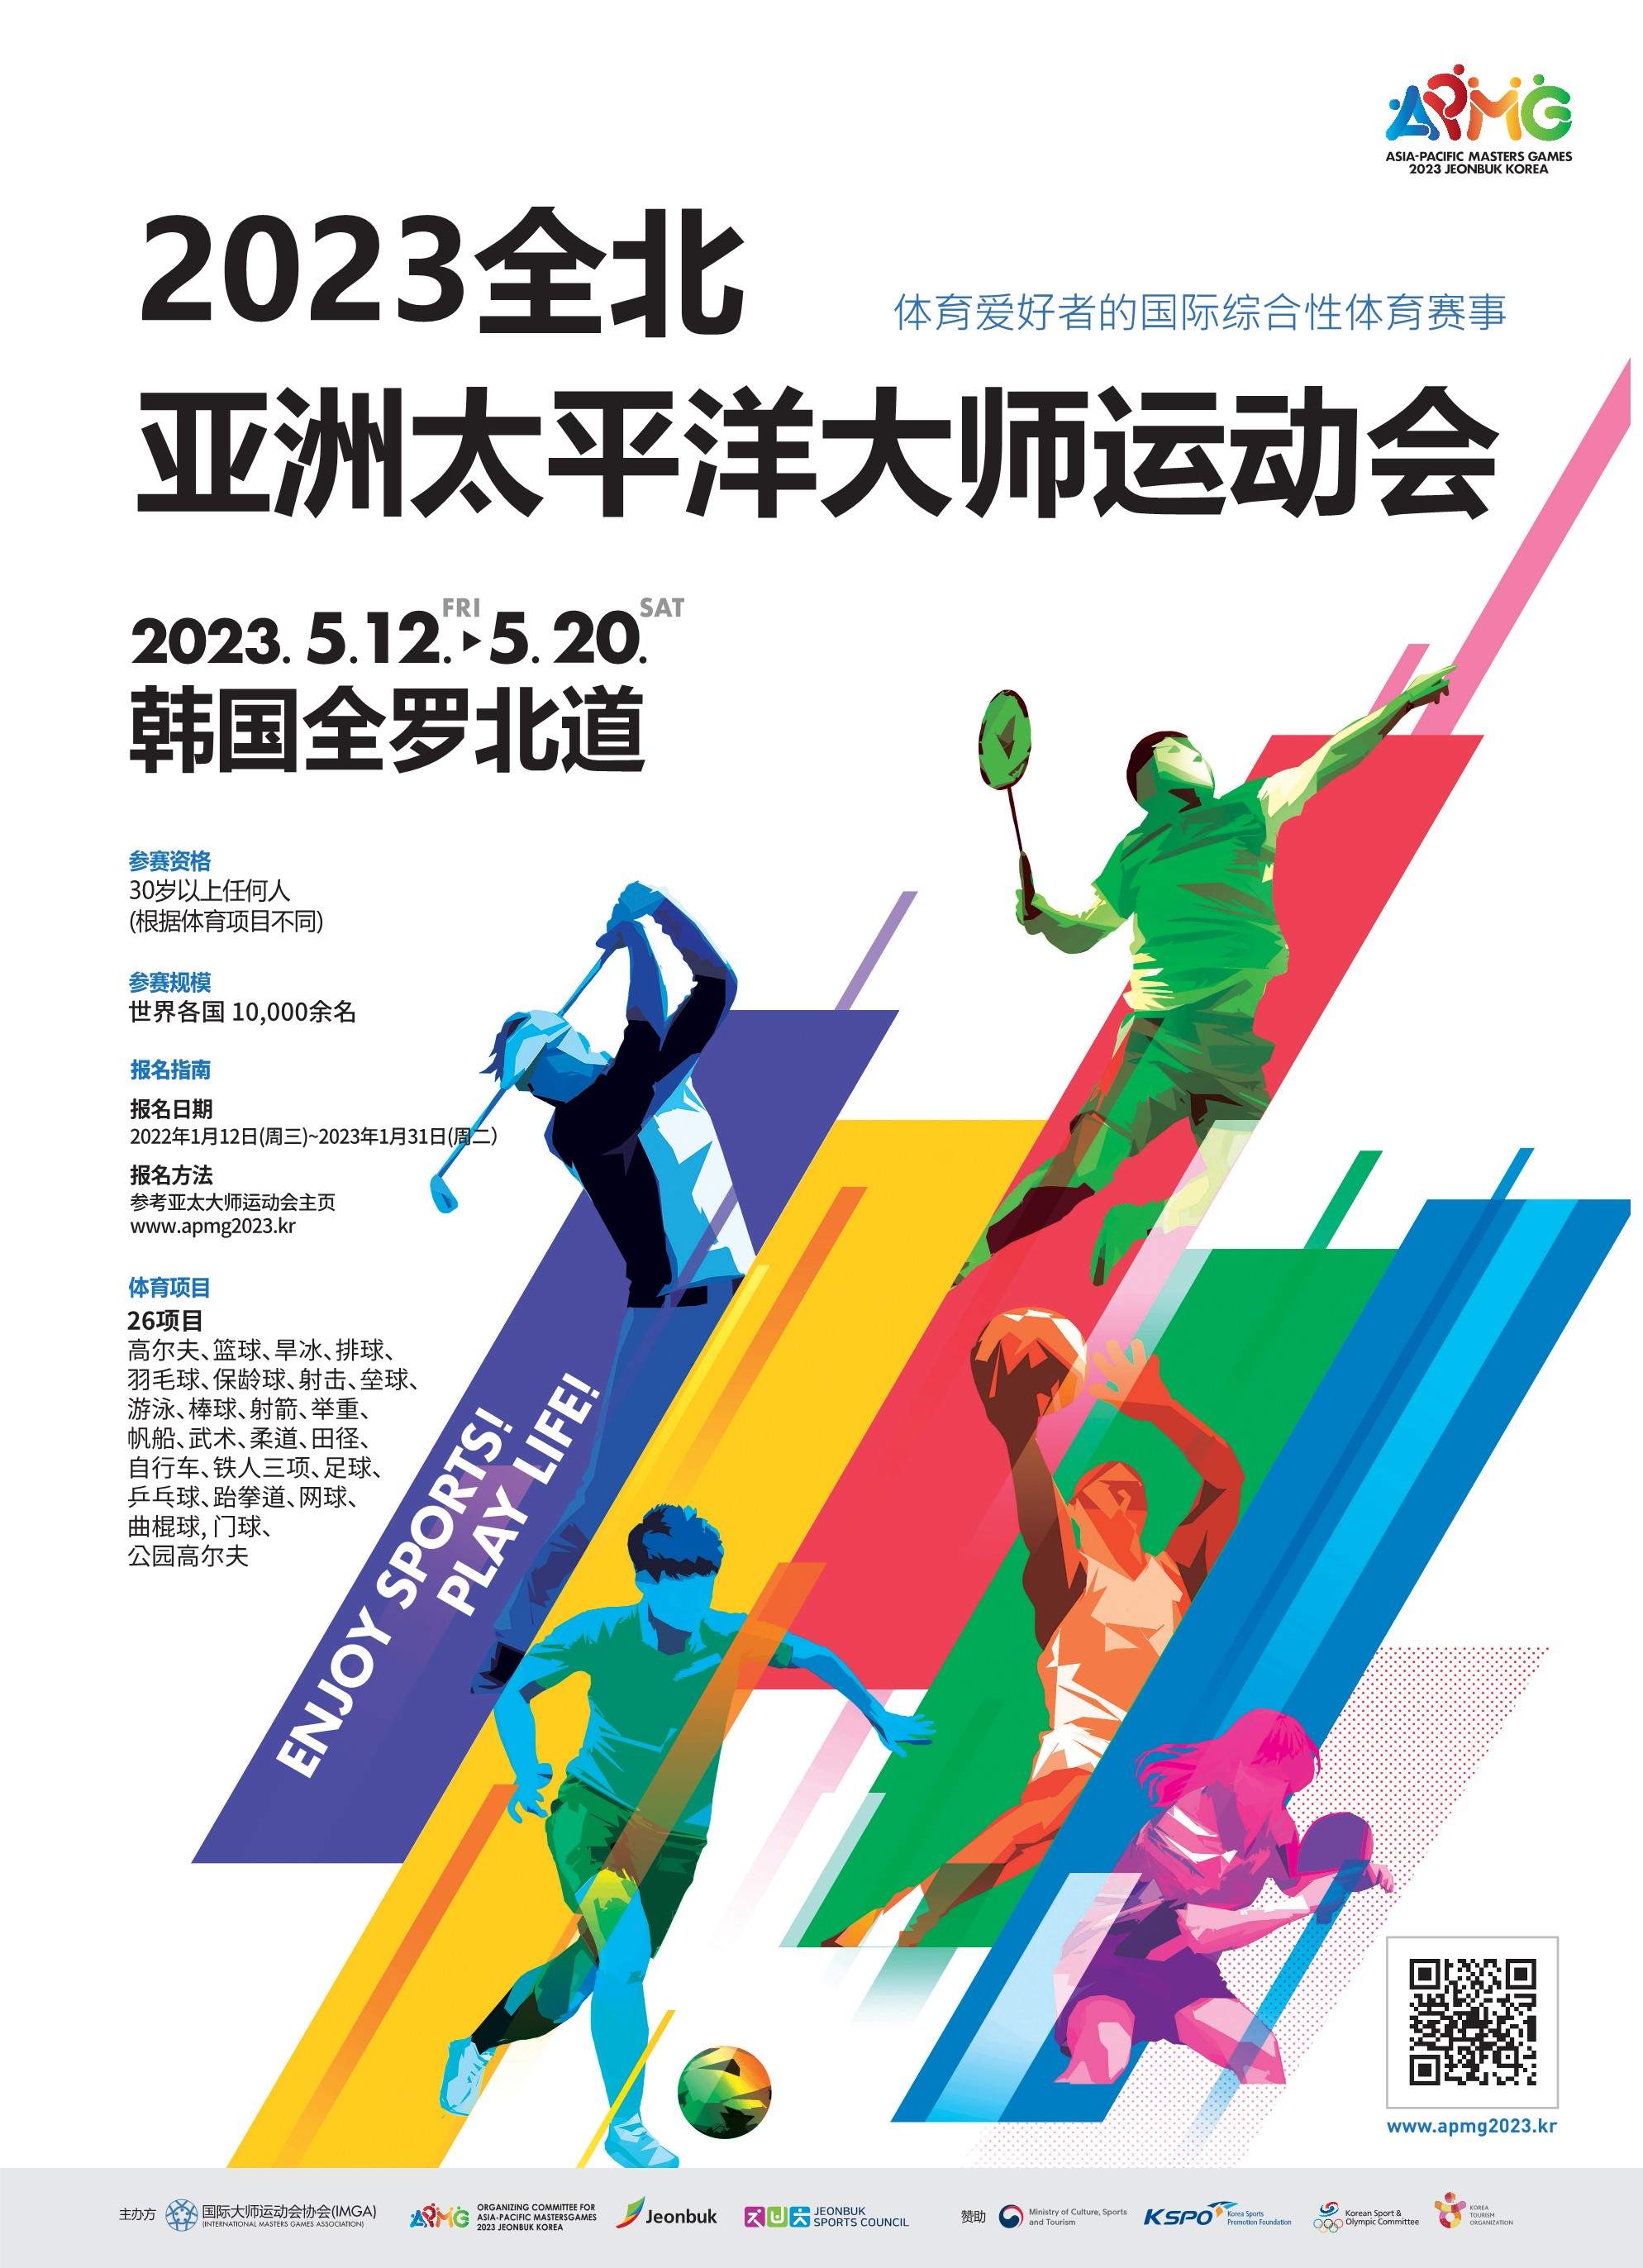 AsiaPacific Masters Games (APMG) 2023 Jeonbuk Korea 상세보기总领事馆公告大韩民国驻成都总领事馆